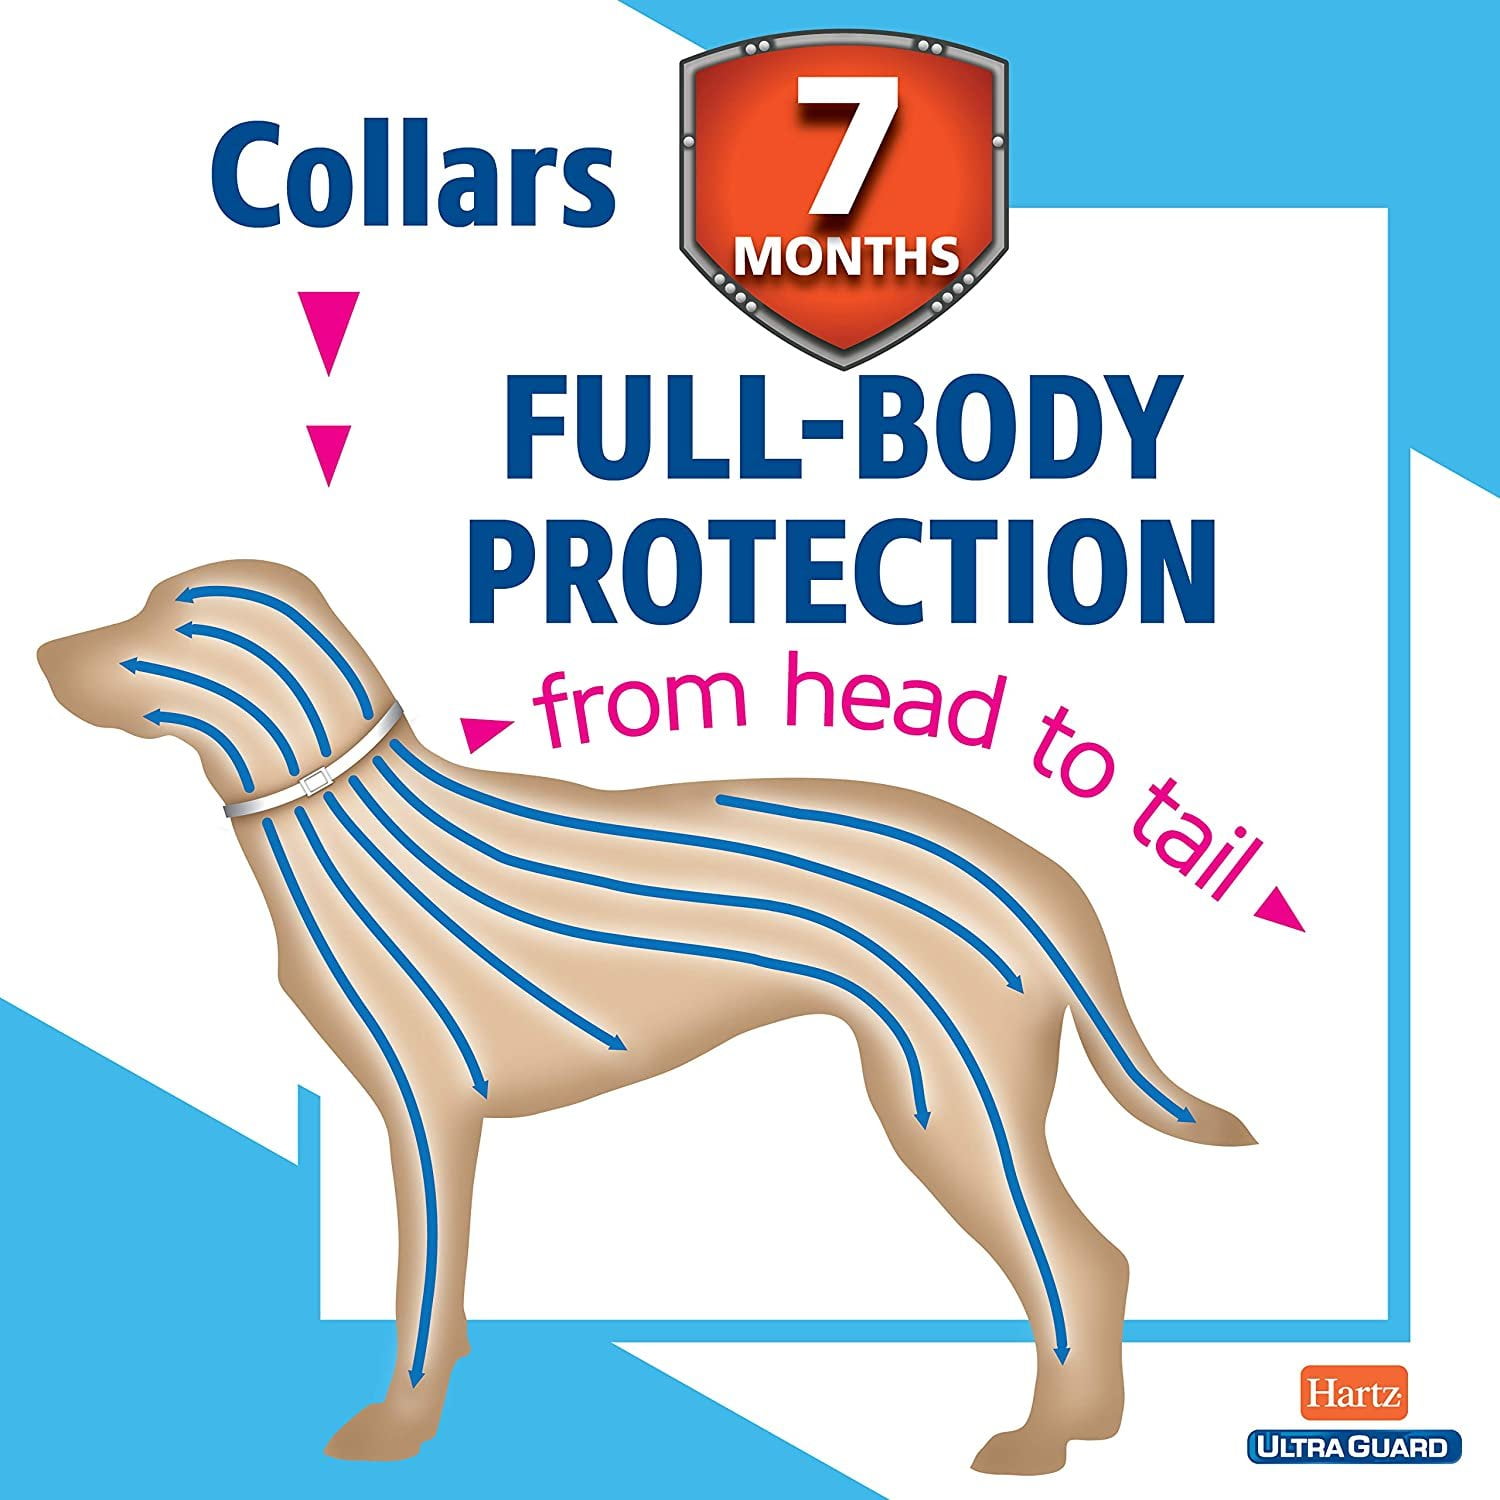 Hartz® UltraGuard Pro® Flea & Tick Collar for Dogs and Puppies